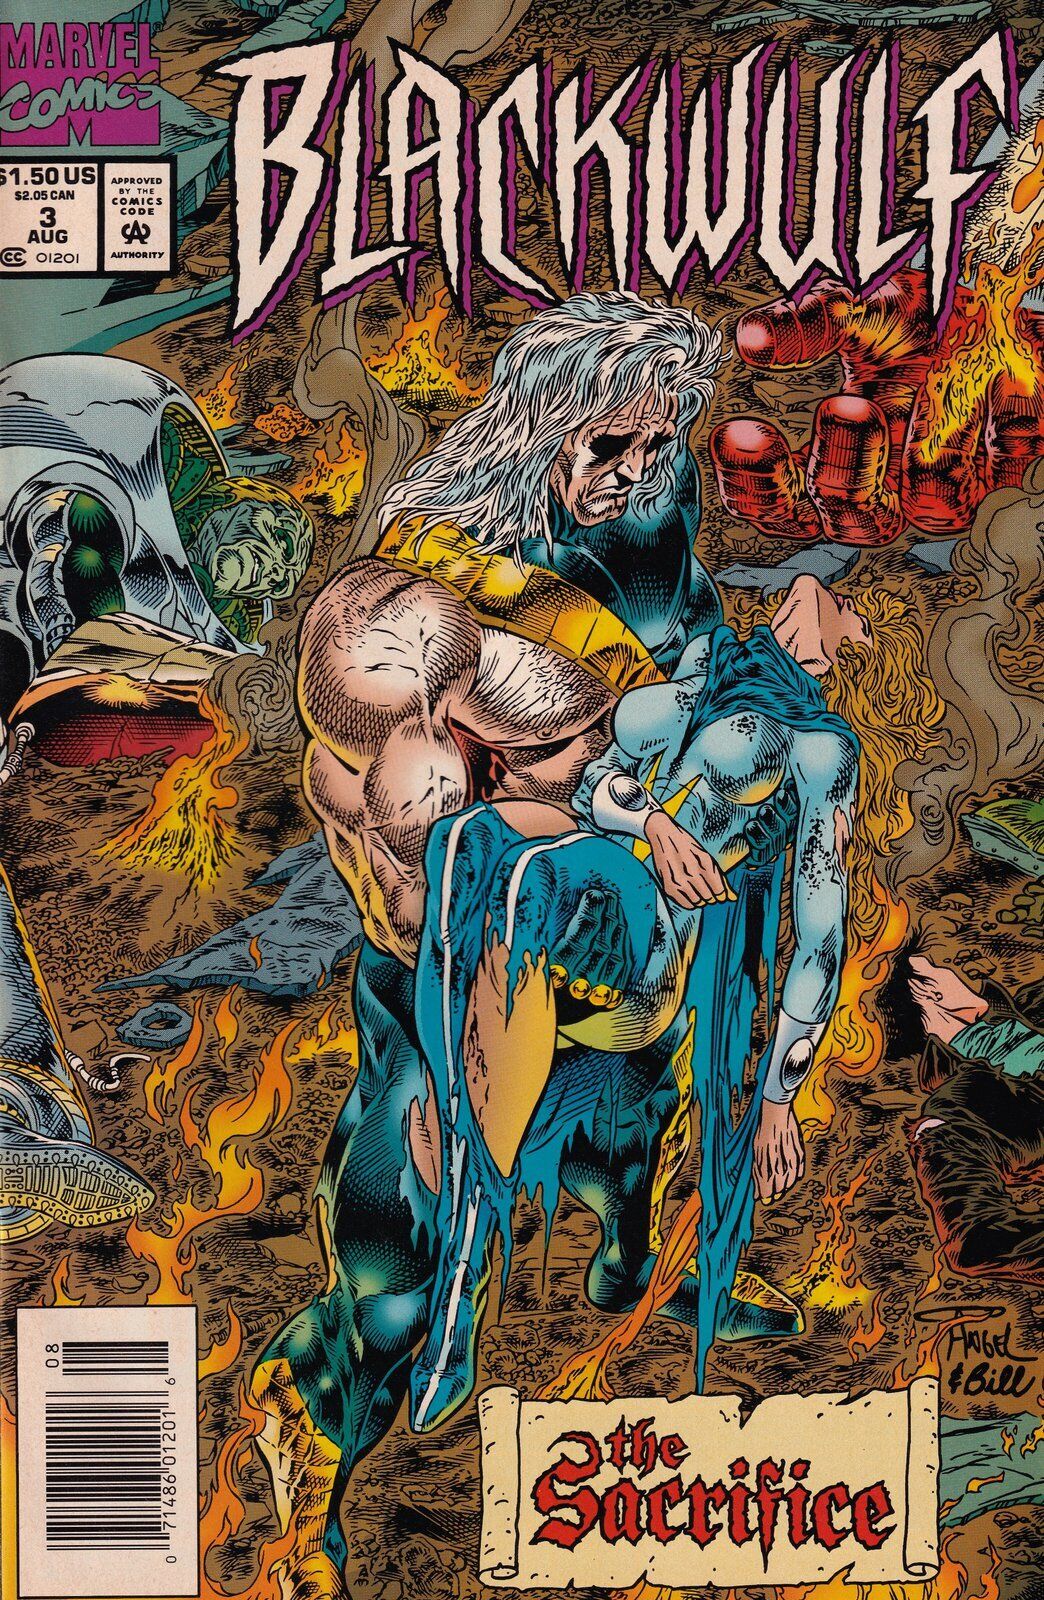 Blackwulf #3 Newsstand Cover (1994-1995) Marvel